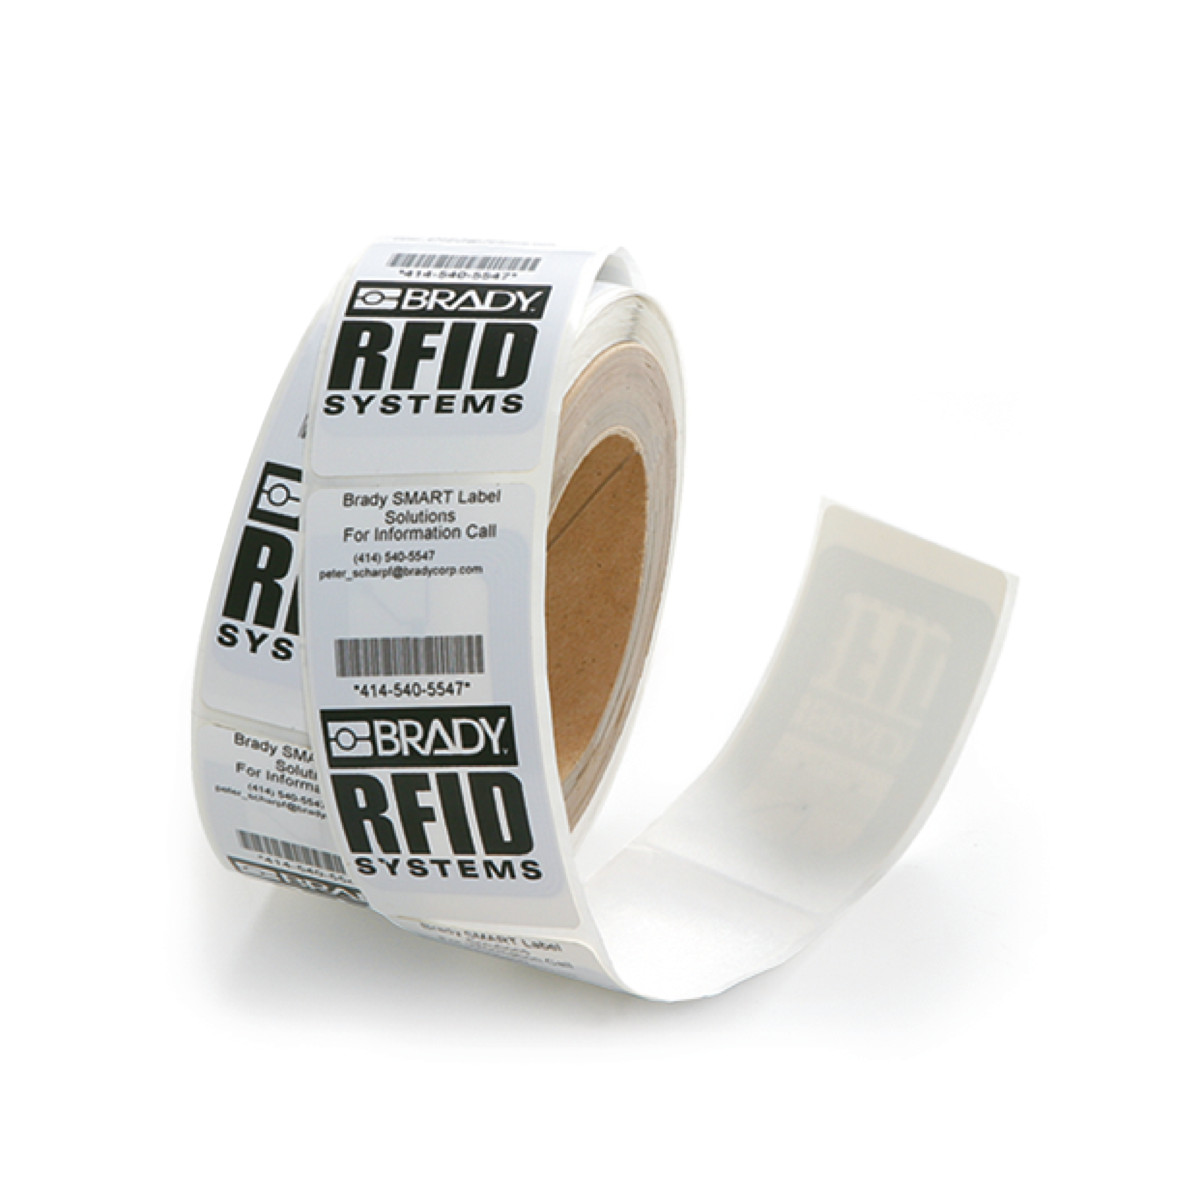 RFID Label Roll lowres